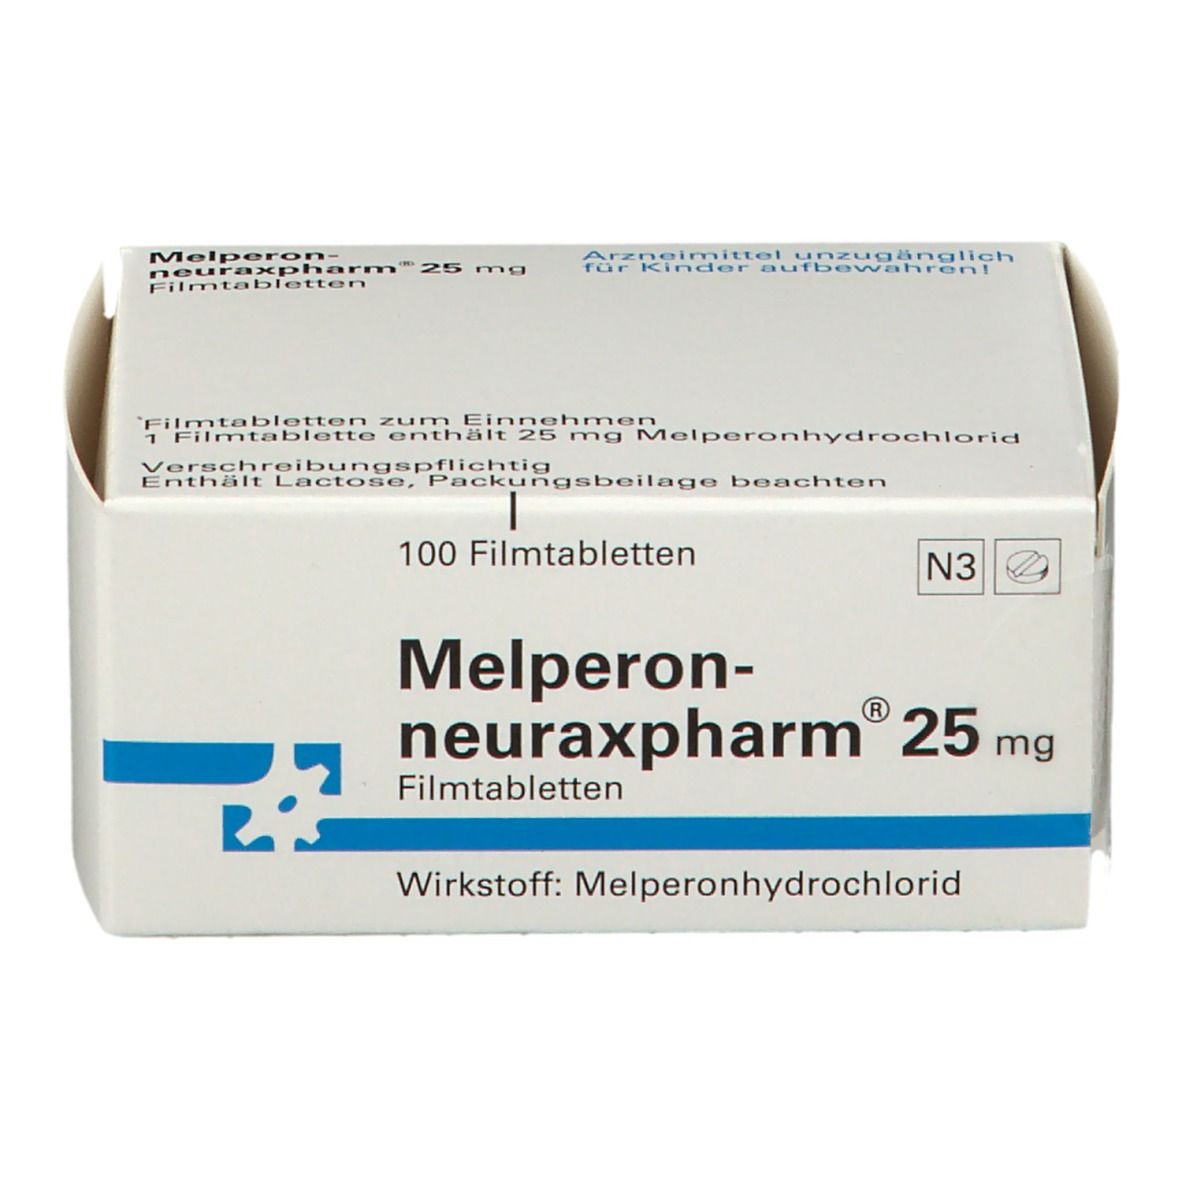 Melperon-neuraxpharm® 25 mg